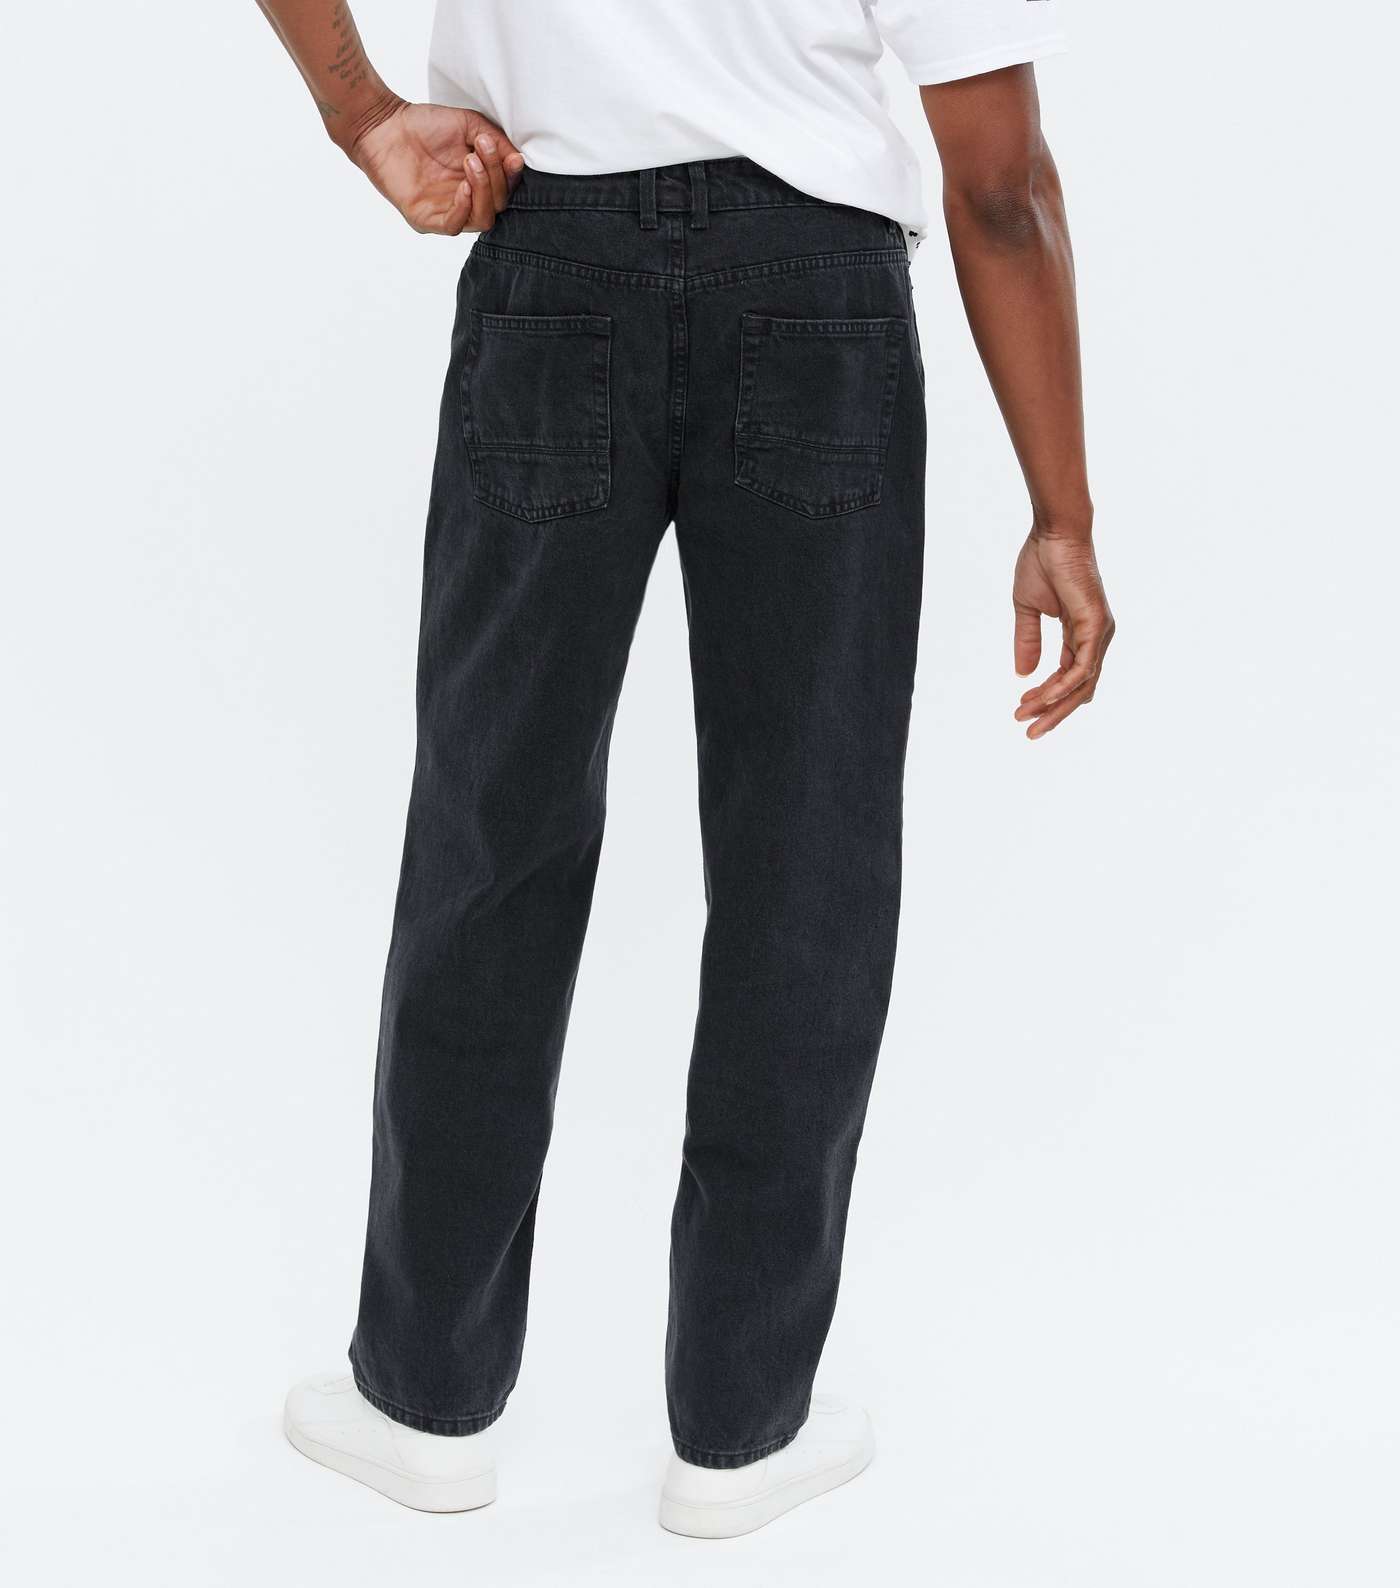 Black Baggy Fit Jeans Image 4